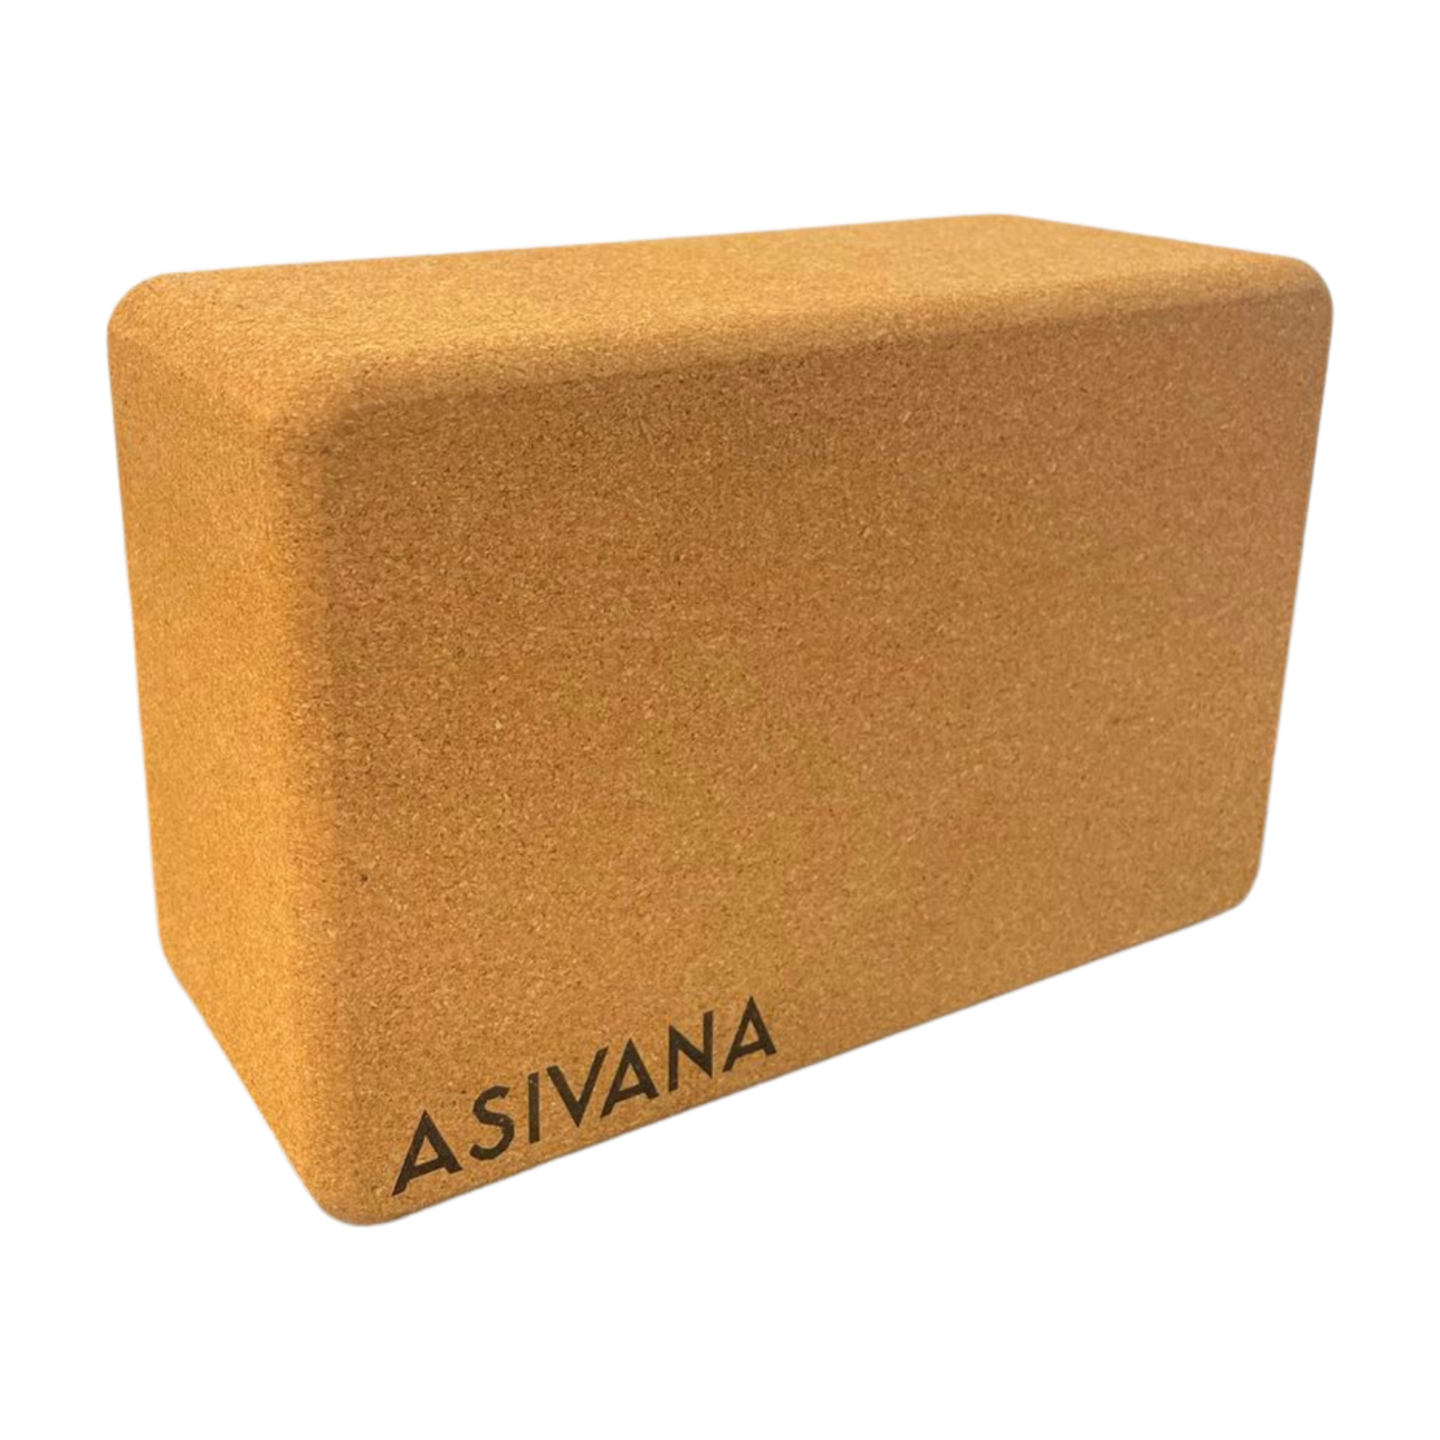 EcoBlock Cork Yoga Block - Made with FSC™ Certified Cork by Asivana Yoga